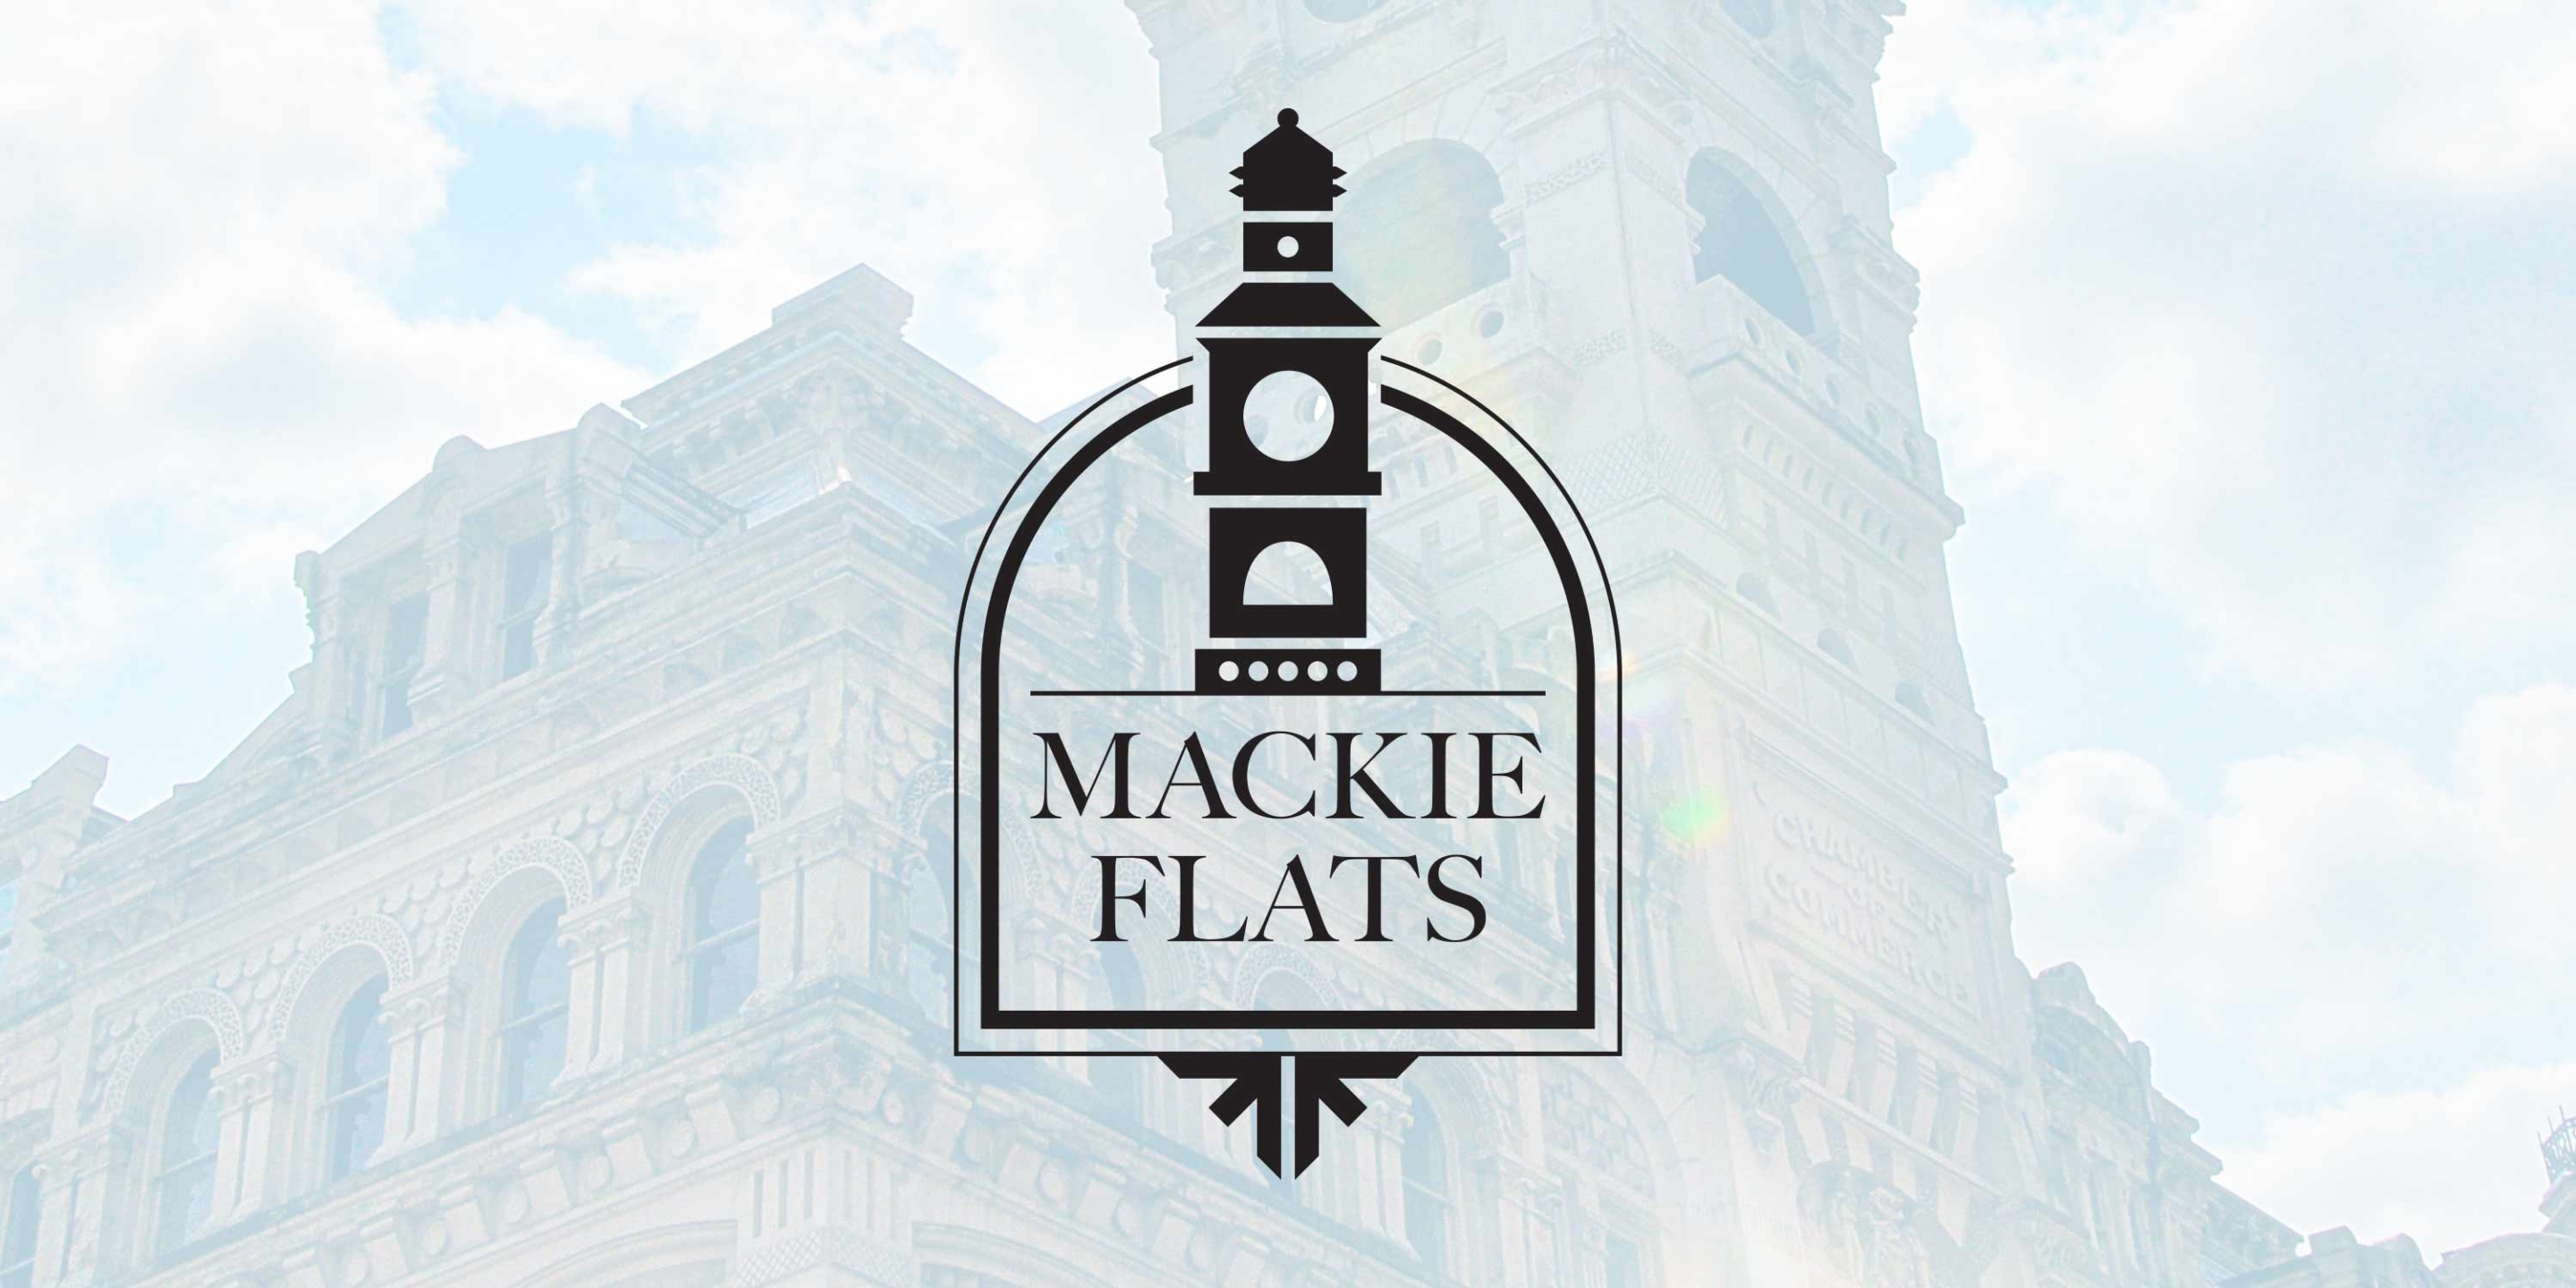 Mackie Flats